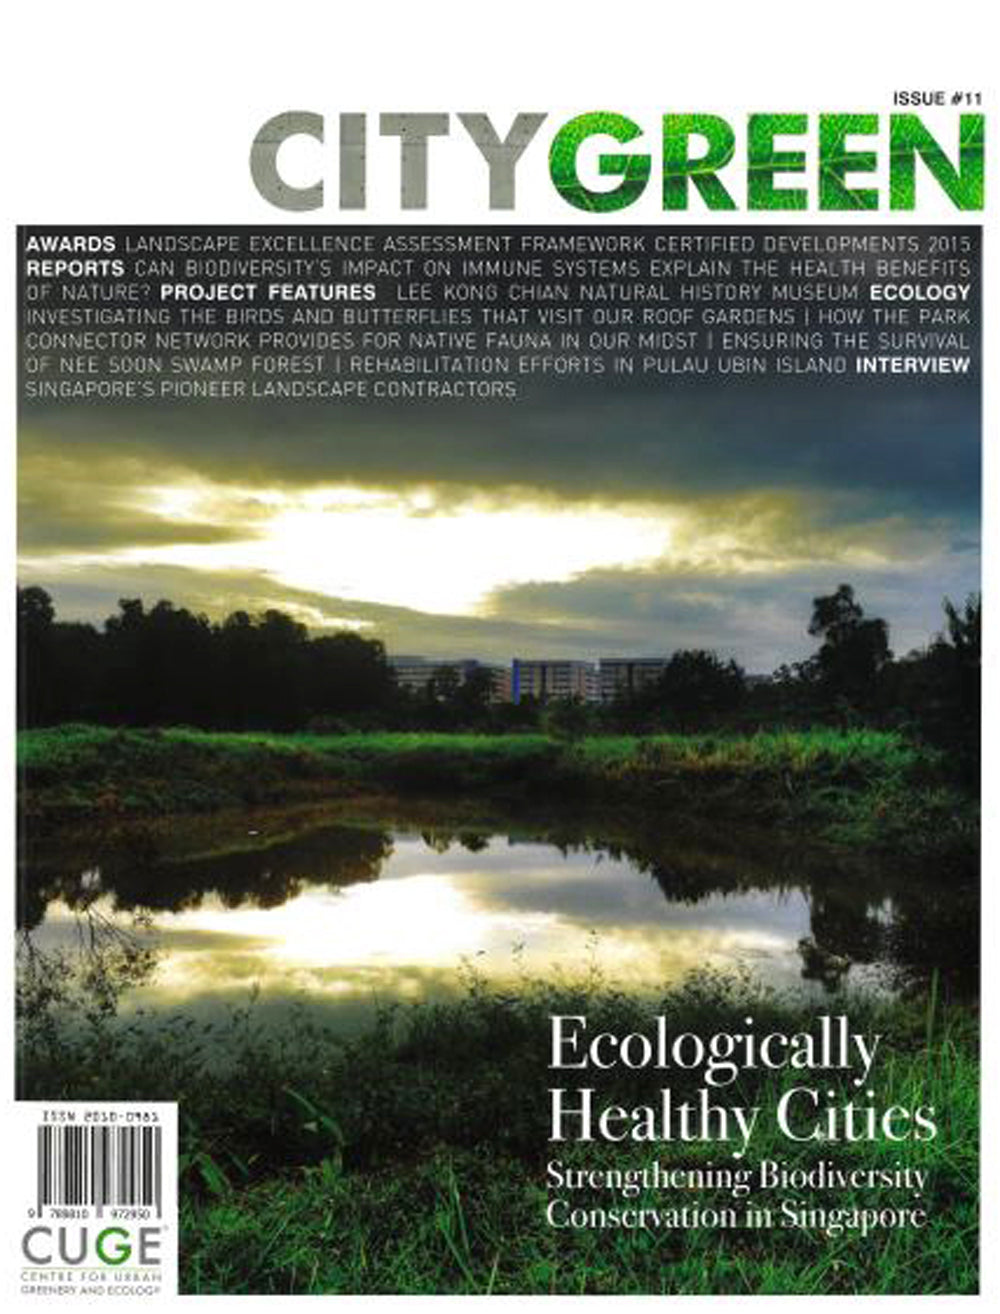 CITYGREEN Issue 11